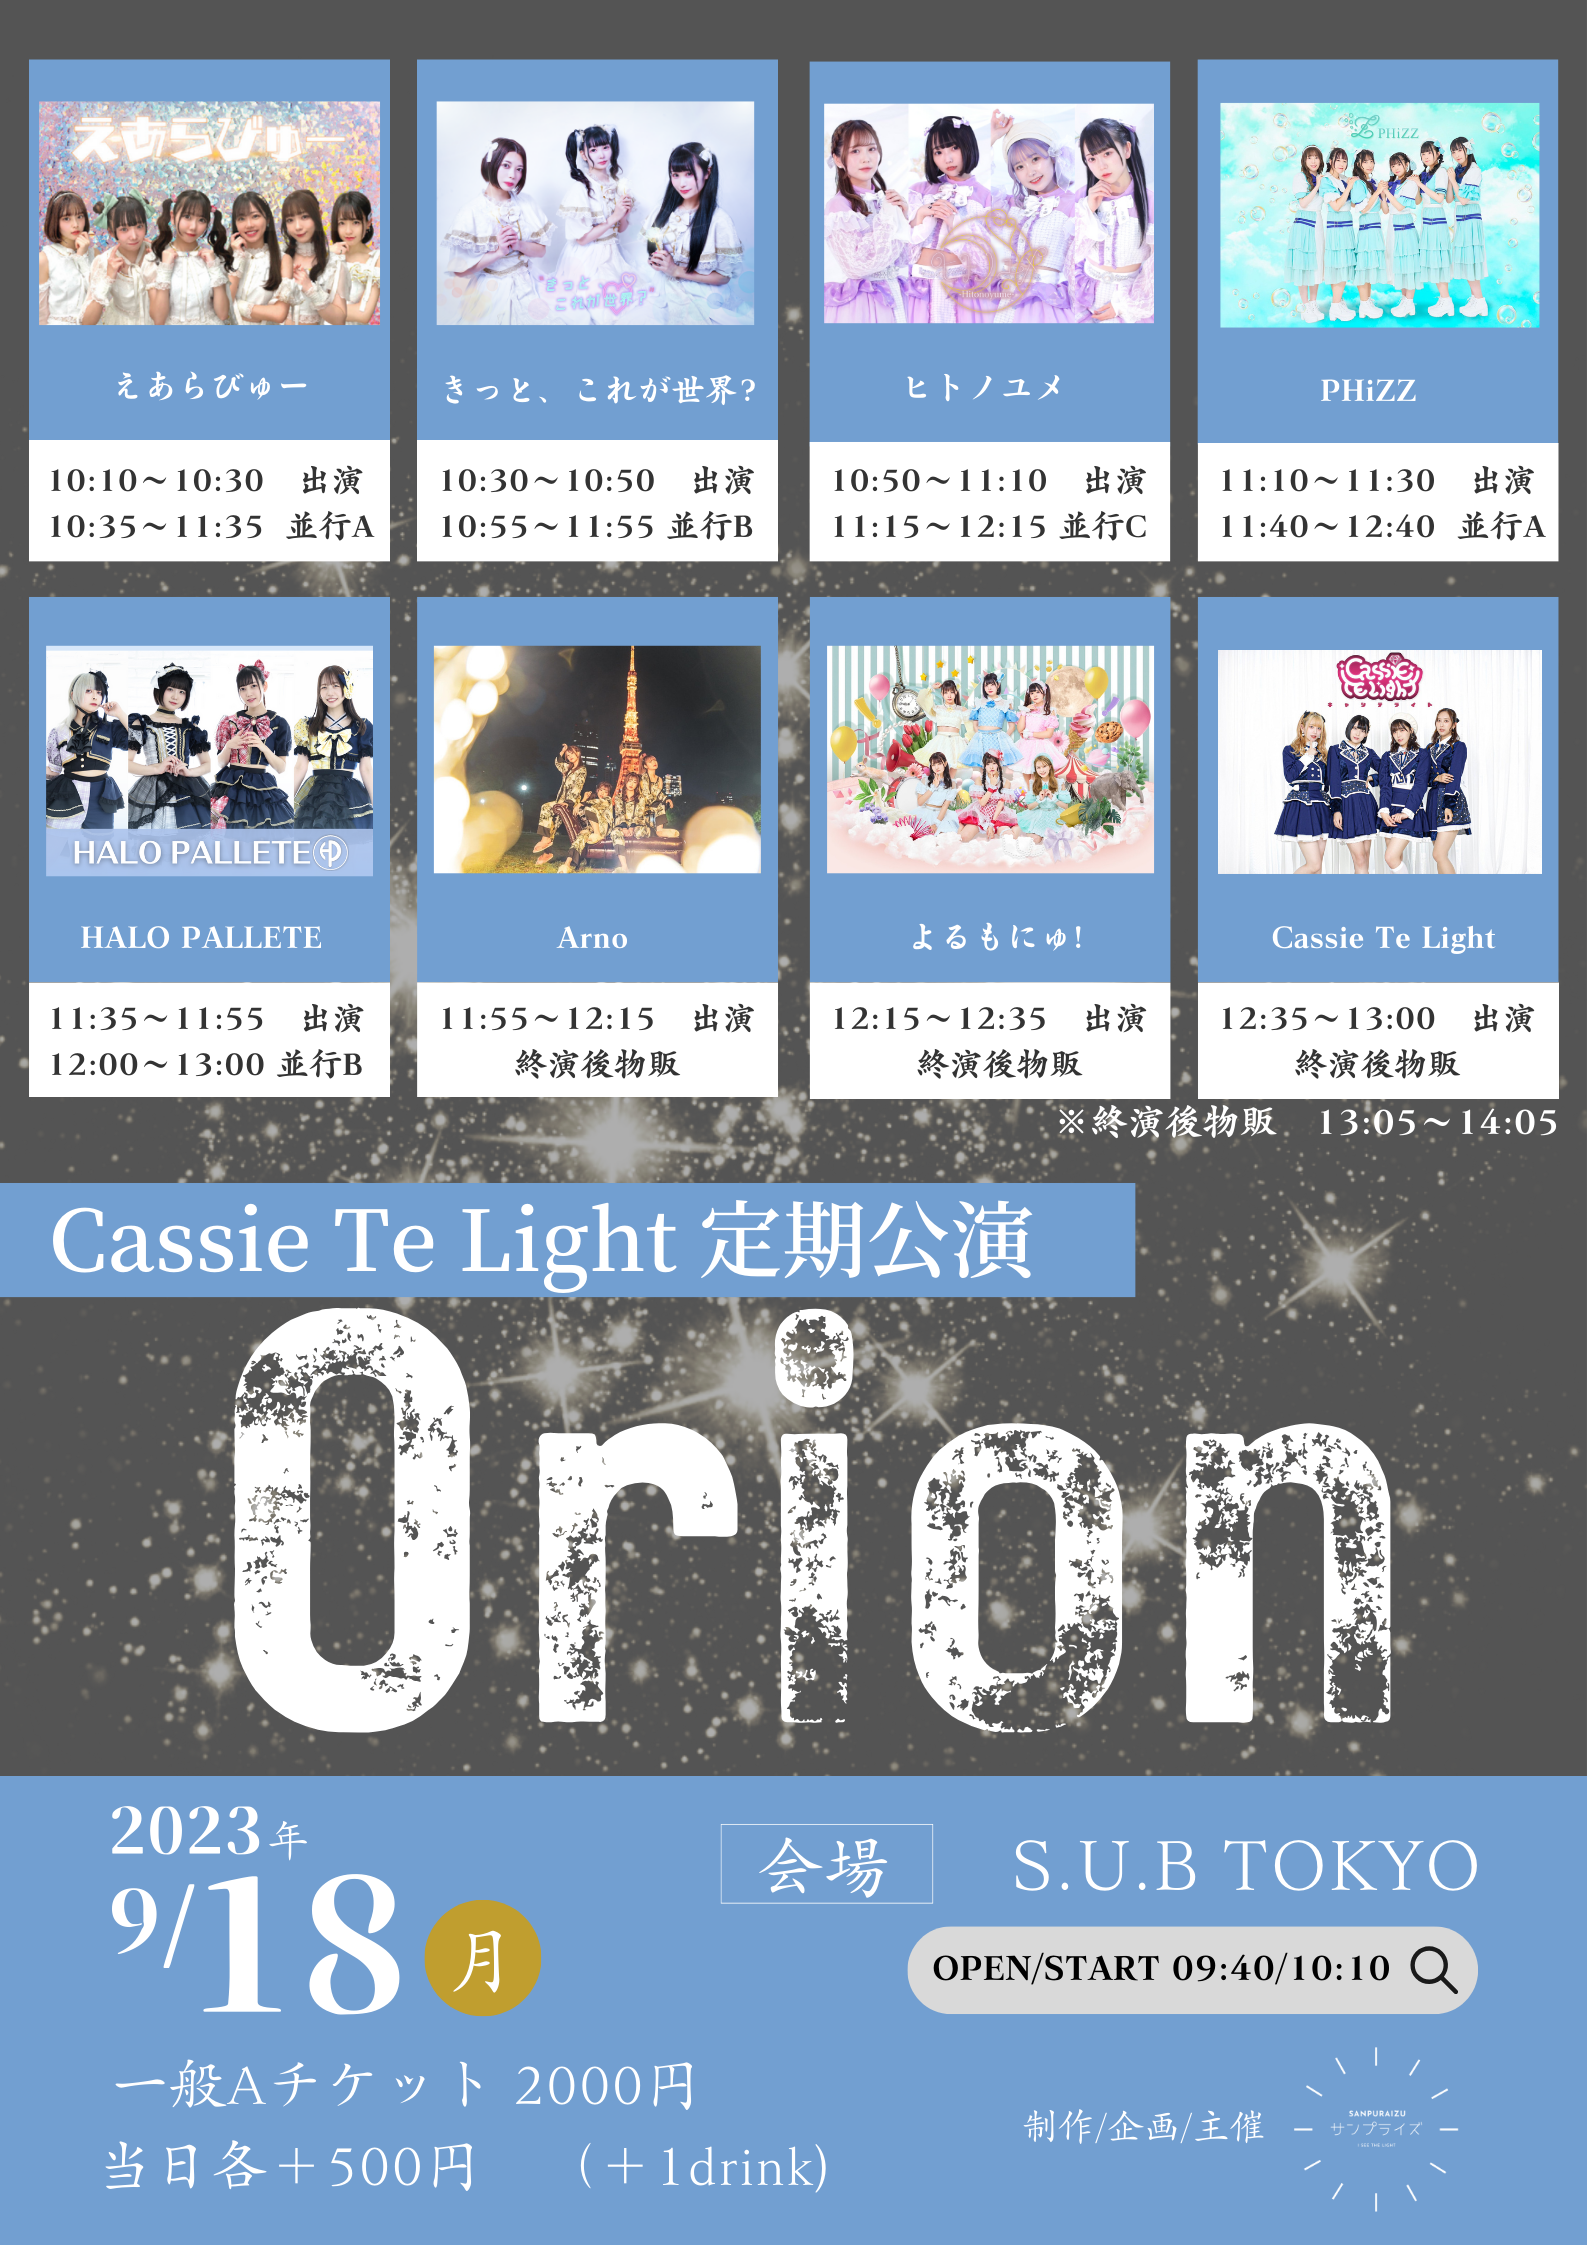 Cassie Te Light定期公演『Orion』